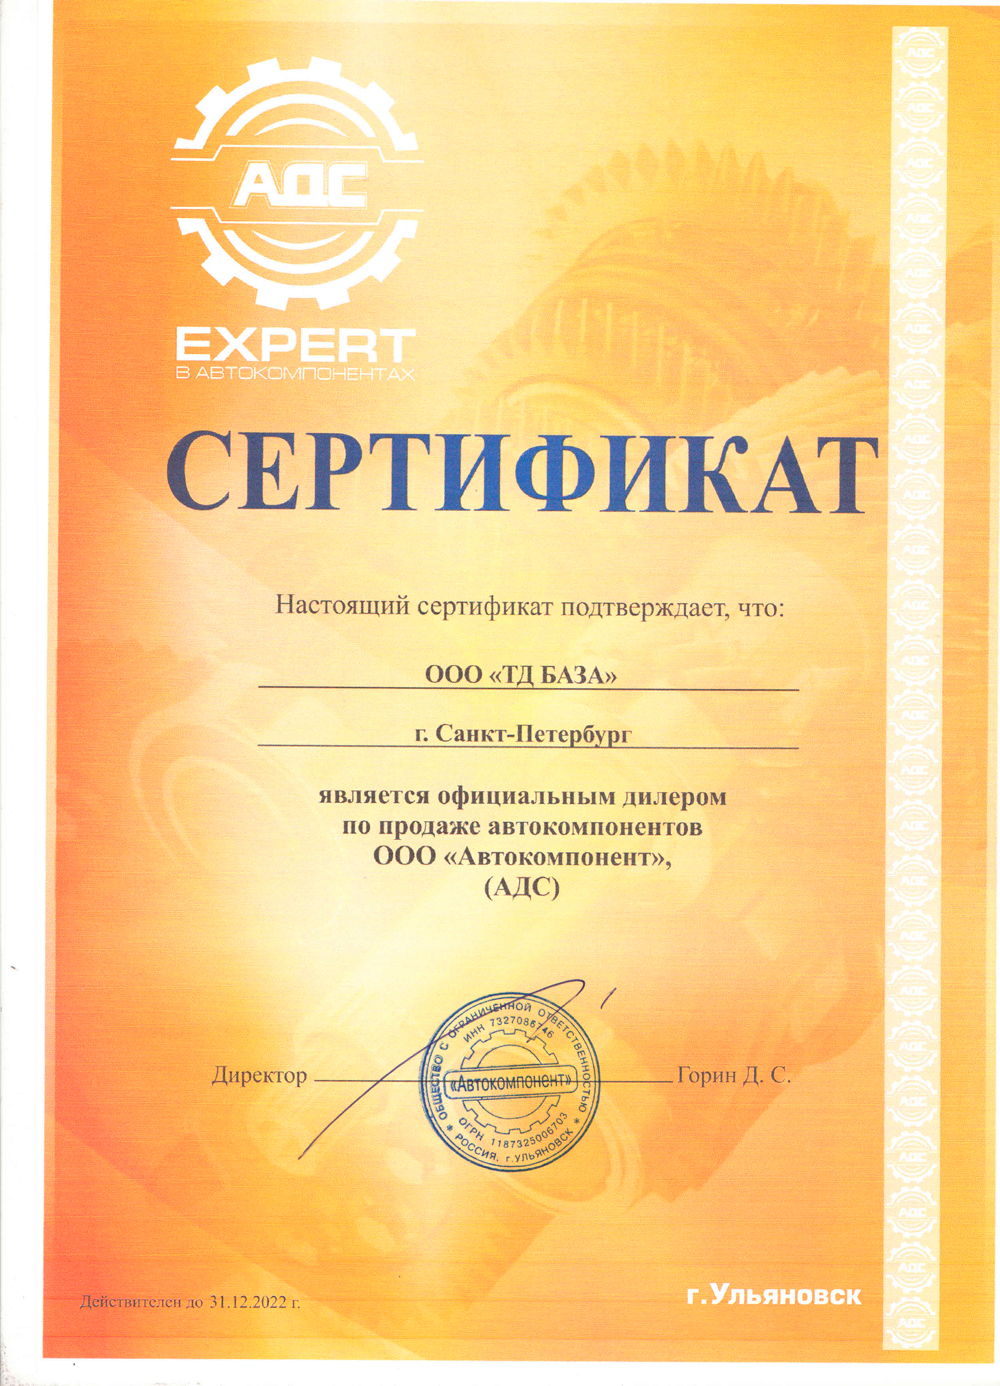 Сертификат дилера АДС